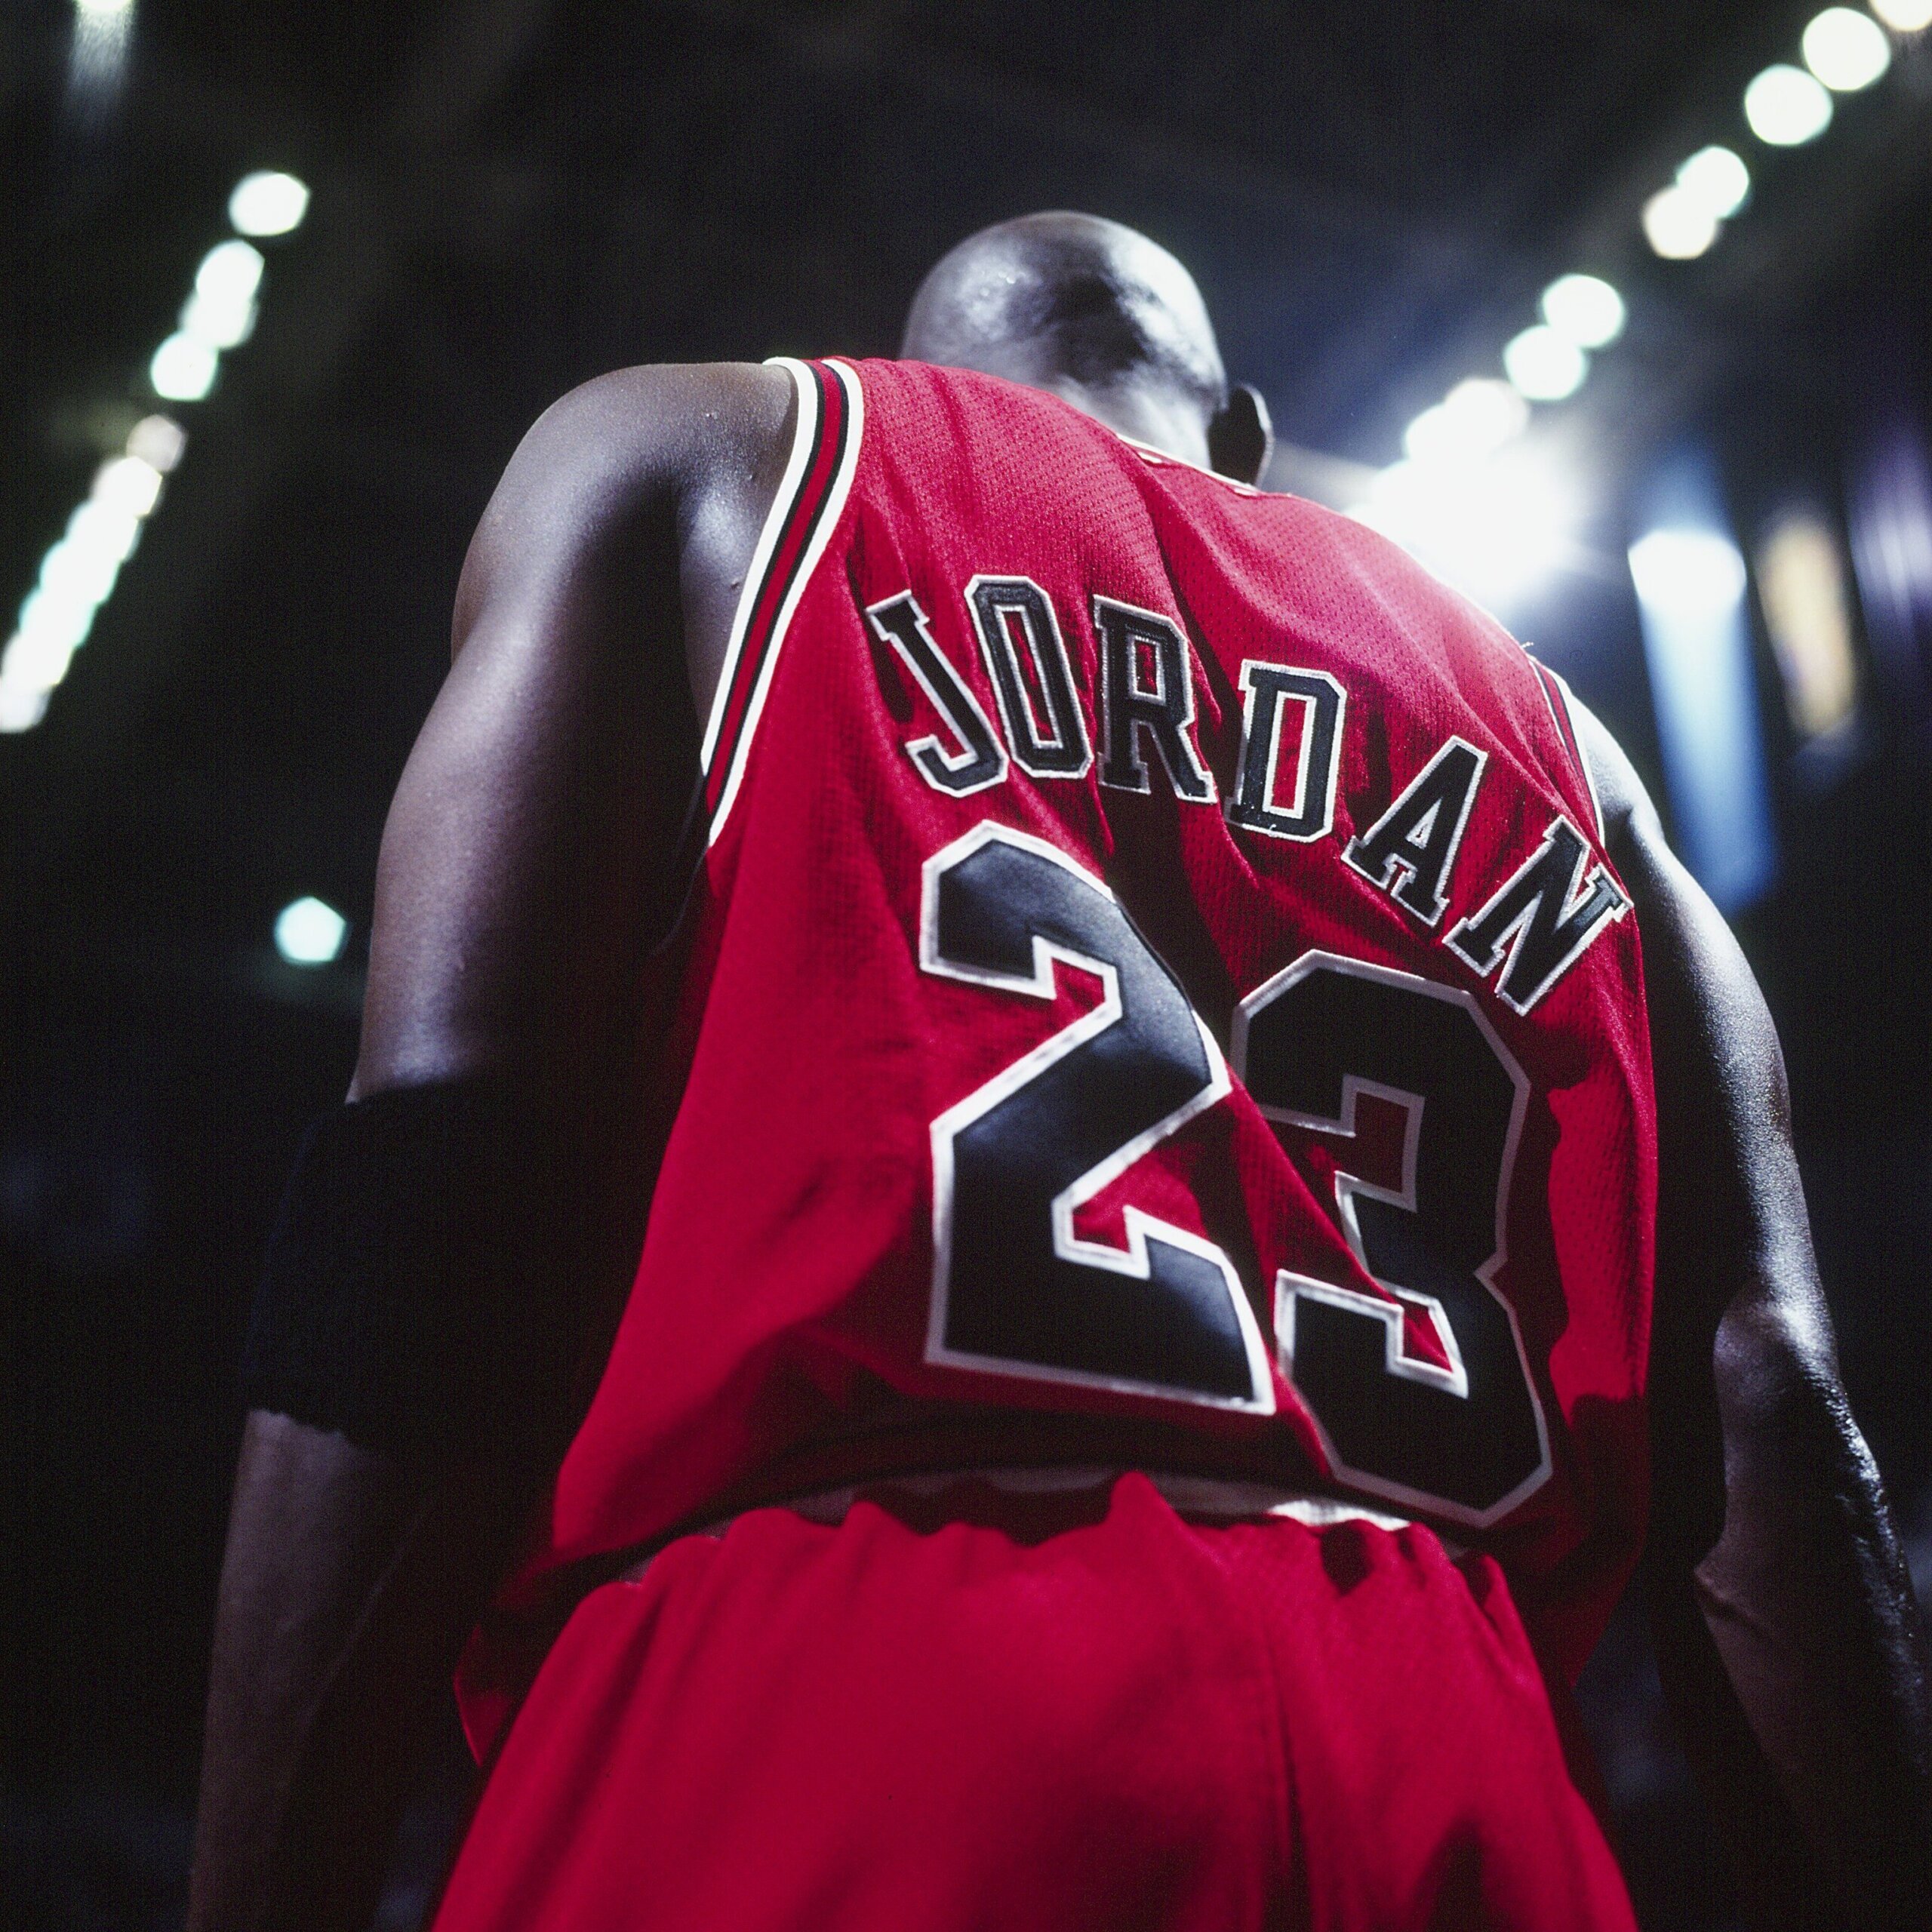 Bulls' Michael Jordan 1998 NBA Finals sneakers get record-tying bid